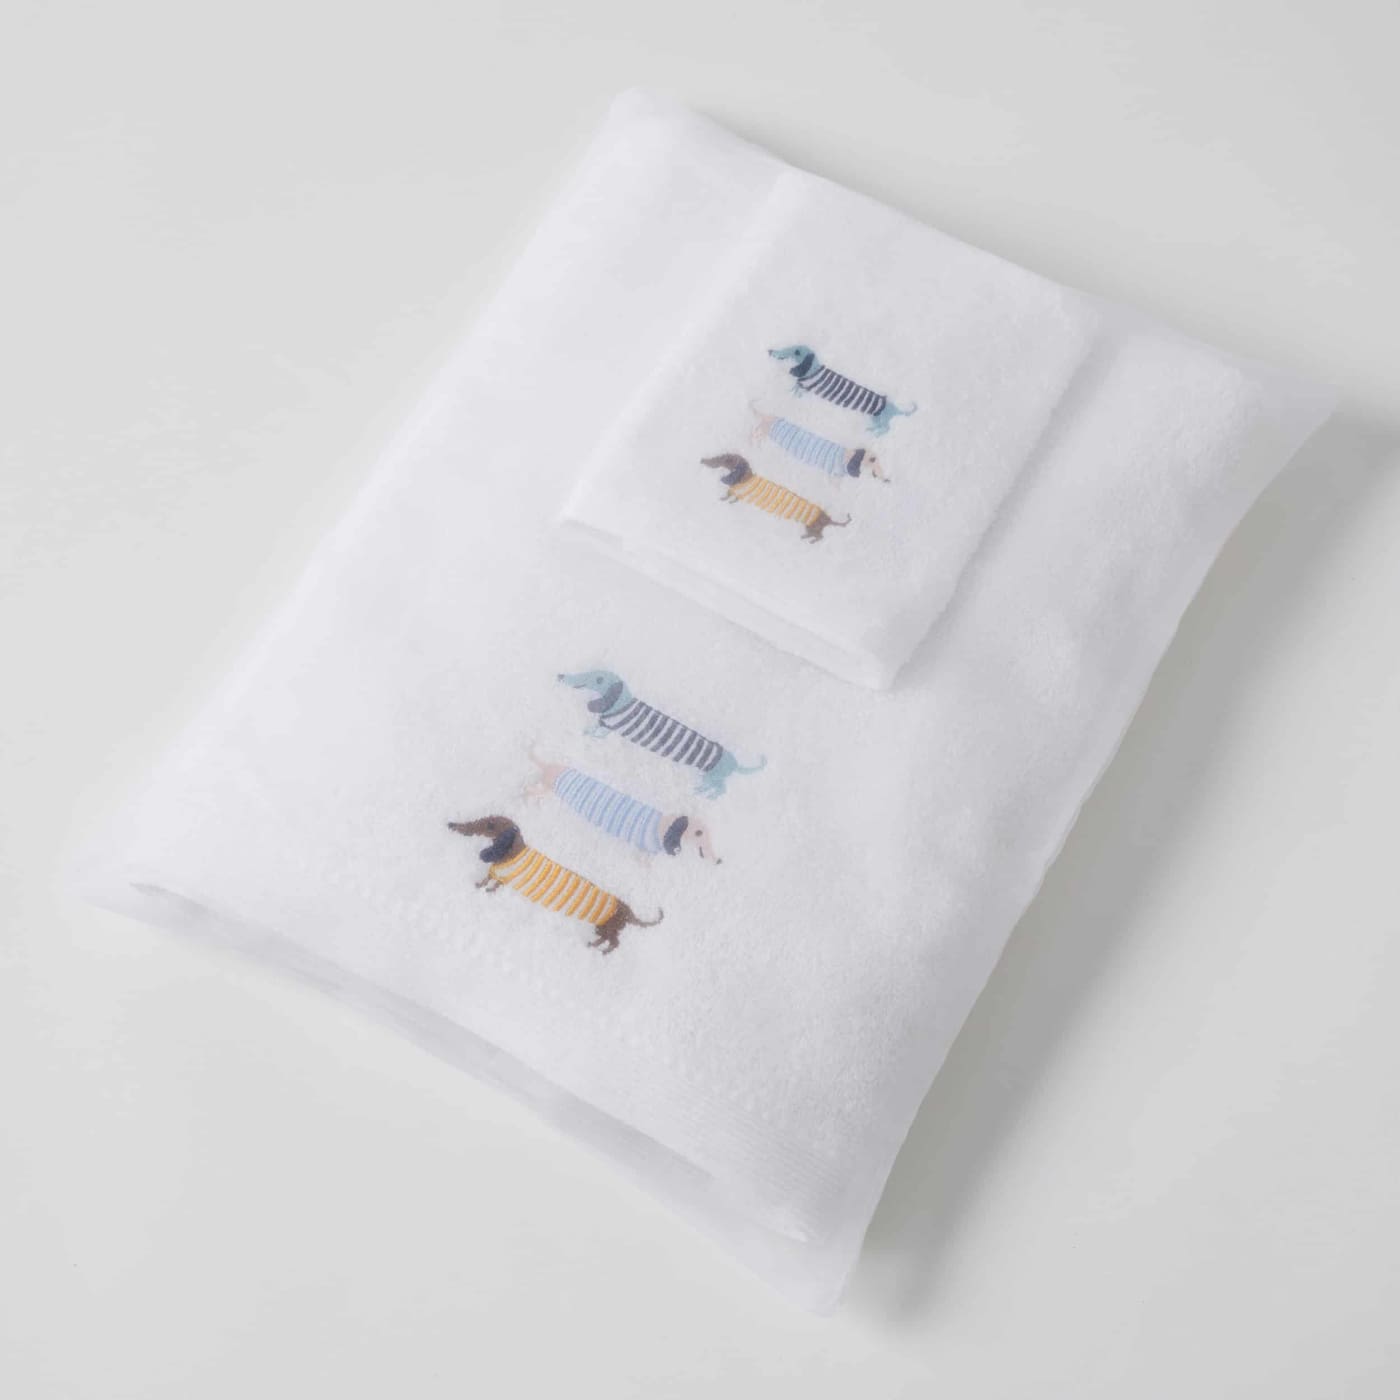 Jiggle & Giggle Towel & Face Washer Set in Organza Bag - Dachshunds - Dachshunds - BATHTIME & CHANGING - TOWELS/WASHERS